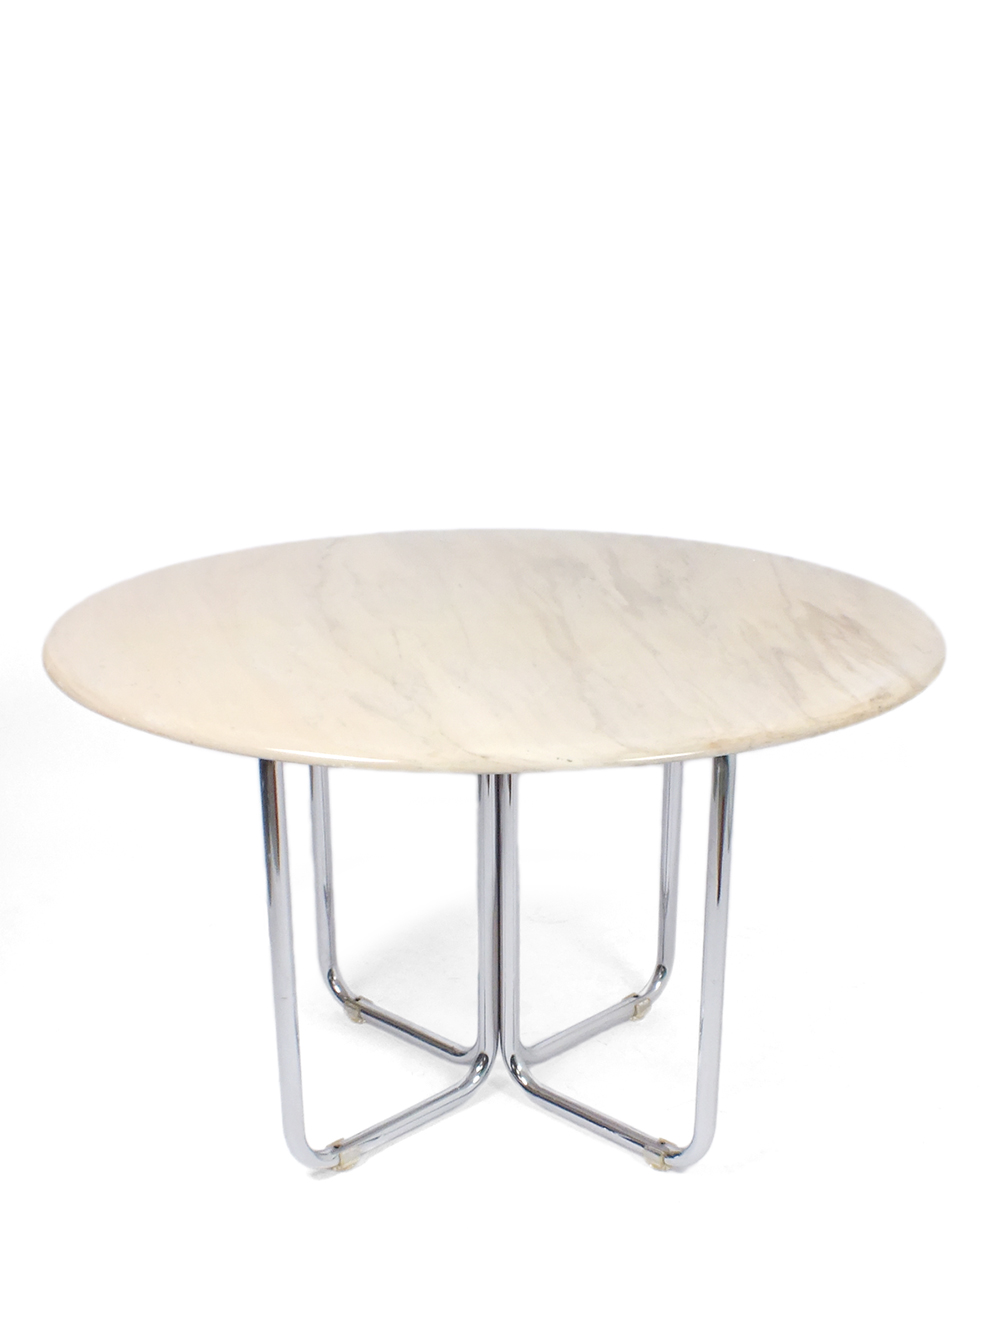 Locomotief handboeien Bondgenoot Round dining table with chrome legs and natural stone top - VAEN